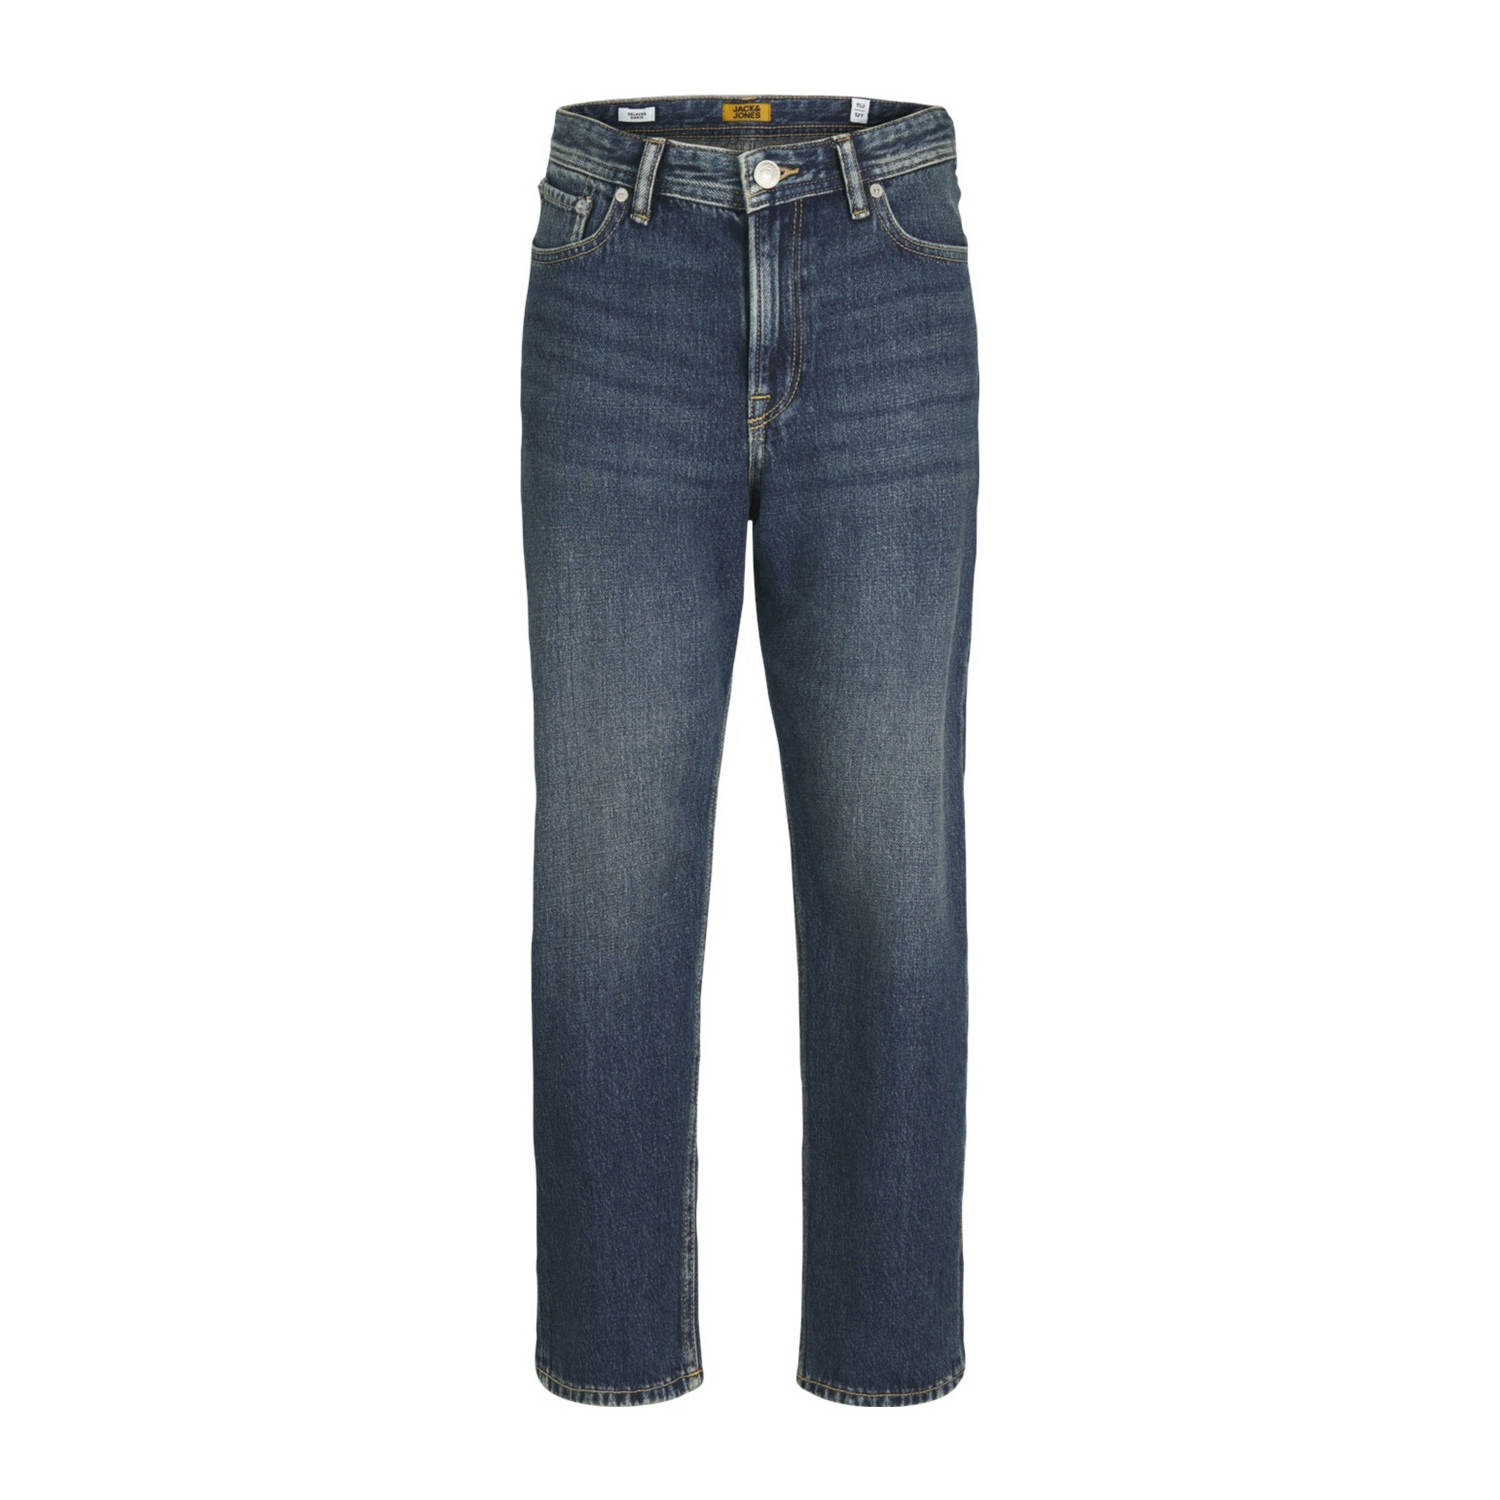 Jack & jones JUNIOR regular fit jeans JJICHRIS JJORIGINAL blue denim mf Blauw 128